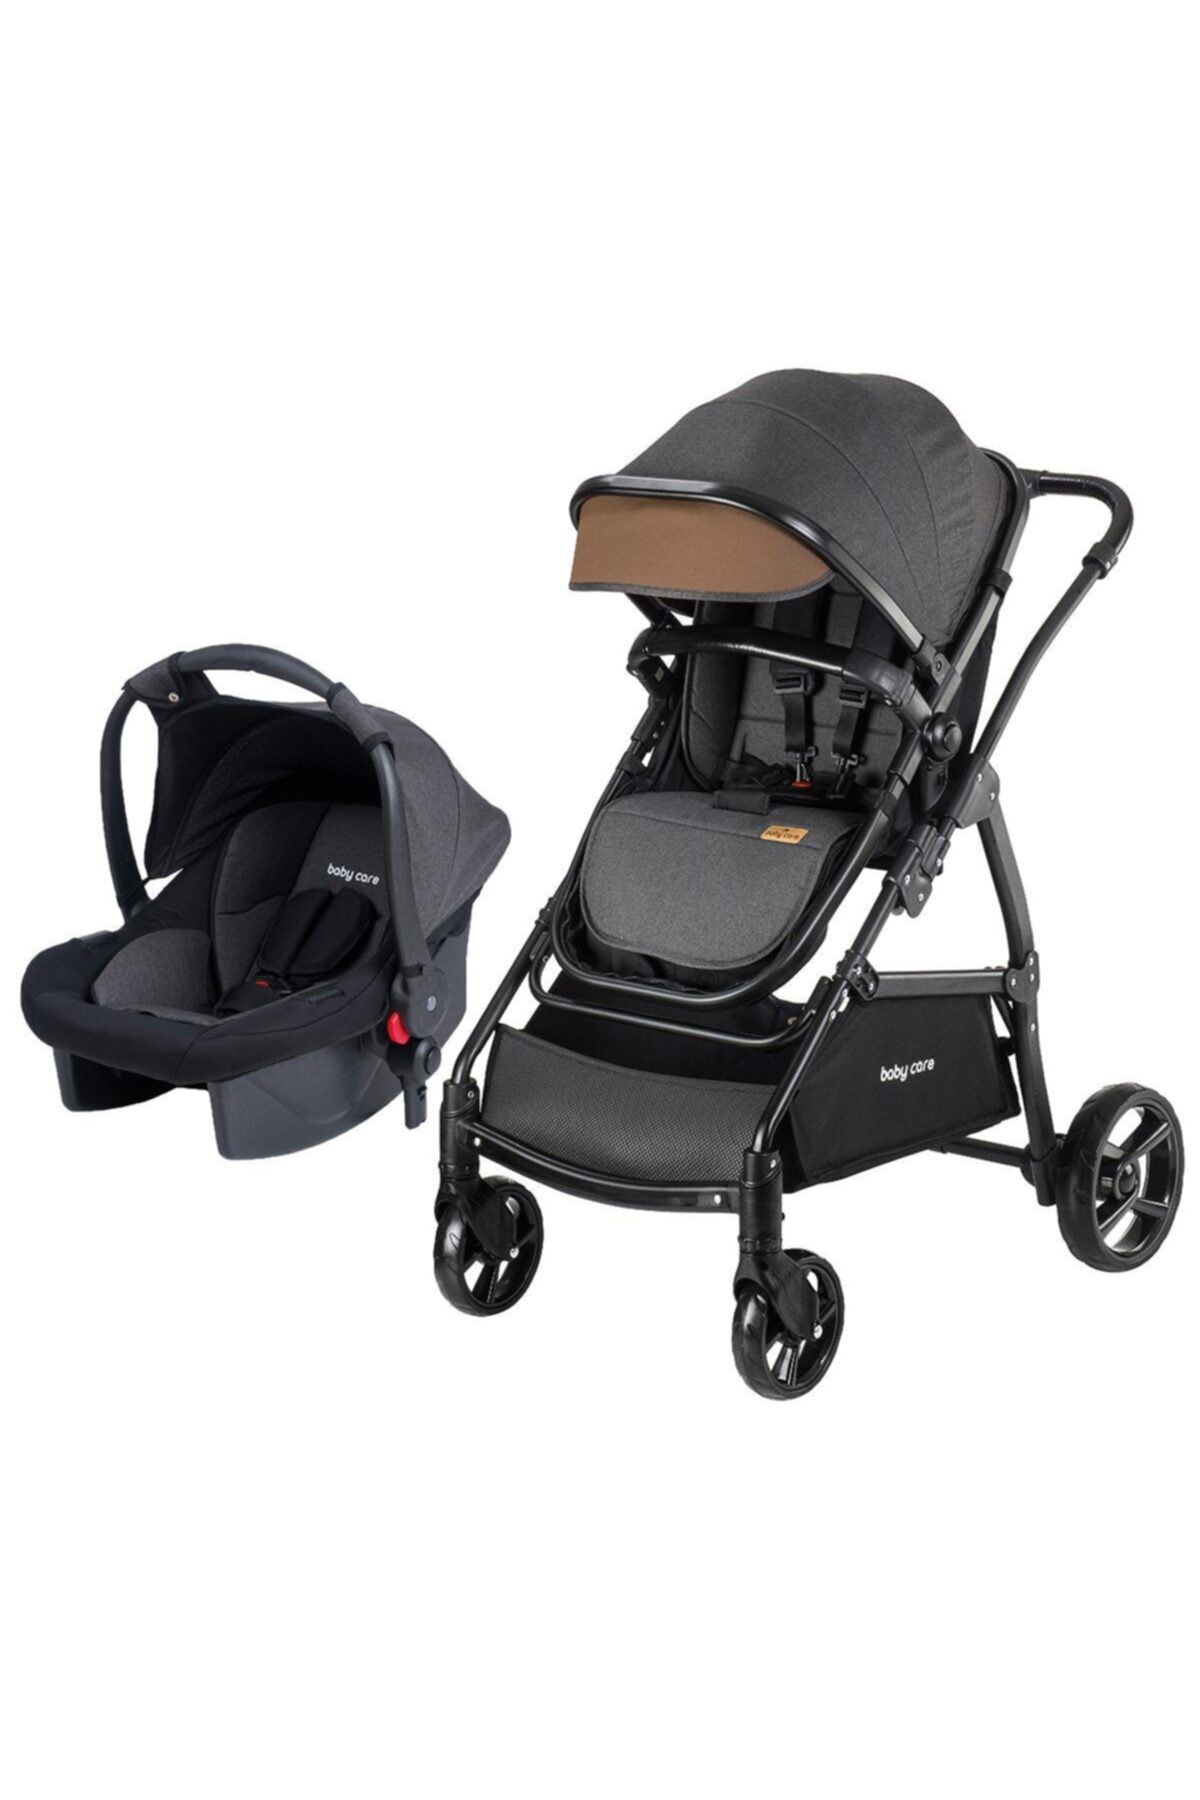 Baby Care Bc-310 Safari Travel Sistem Bebek Arabası Siyah